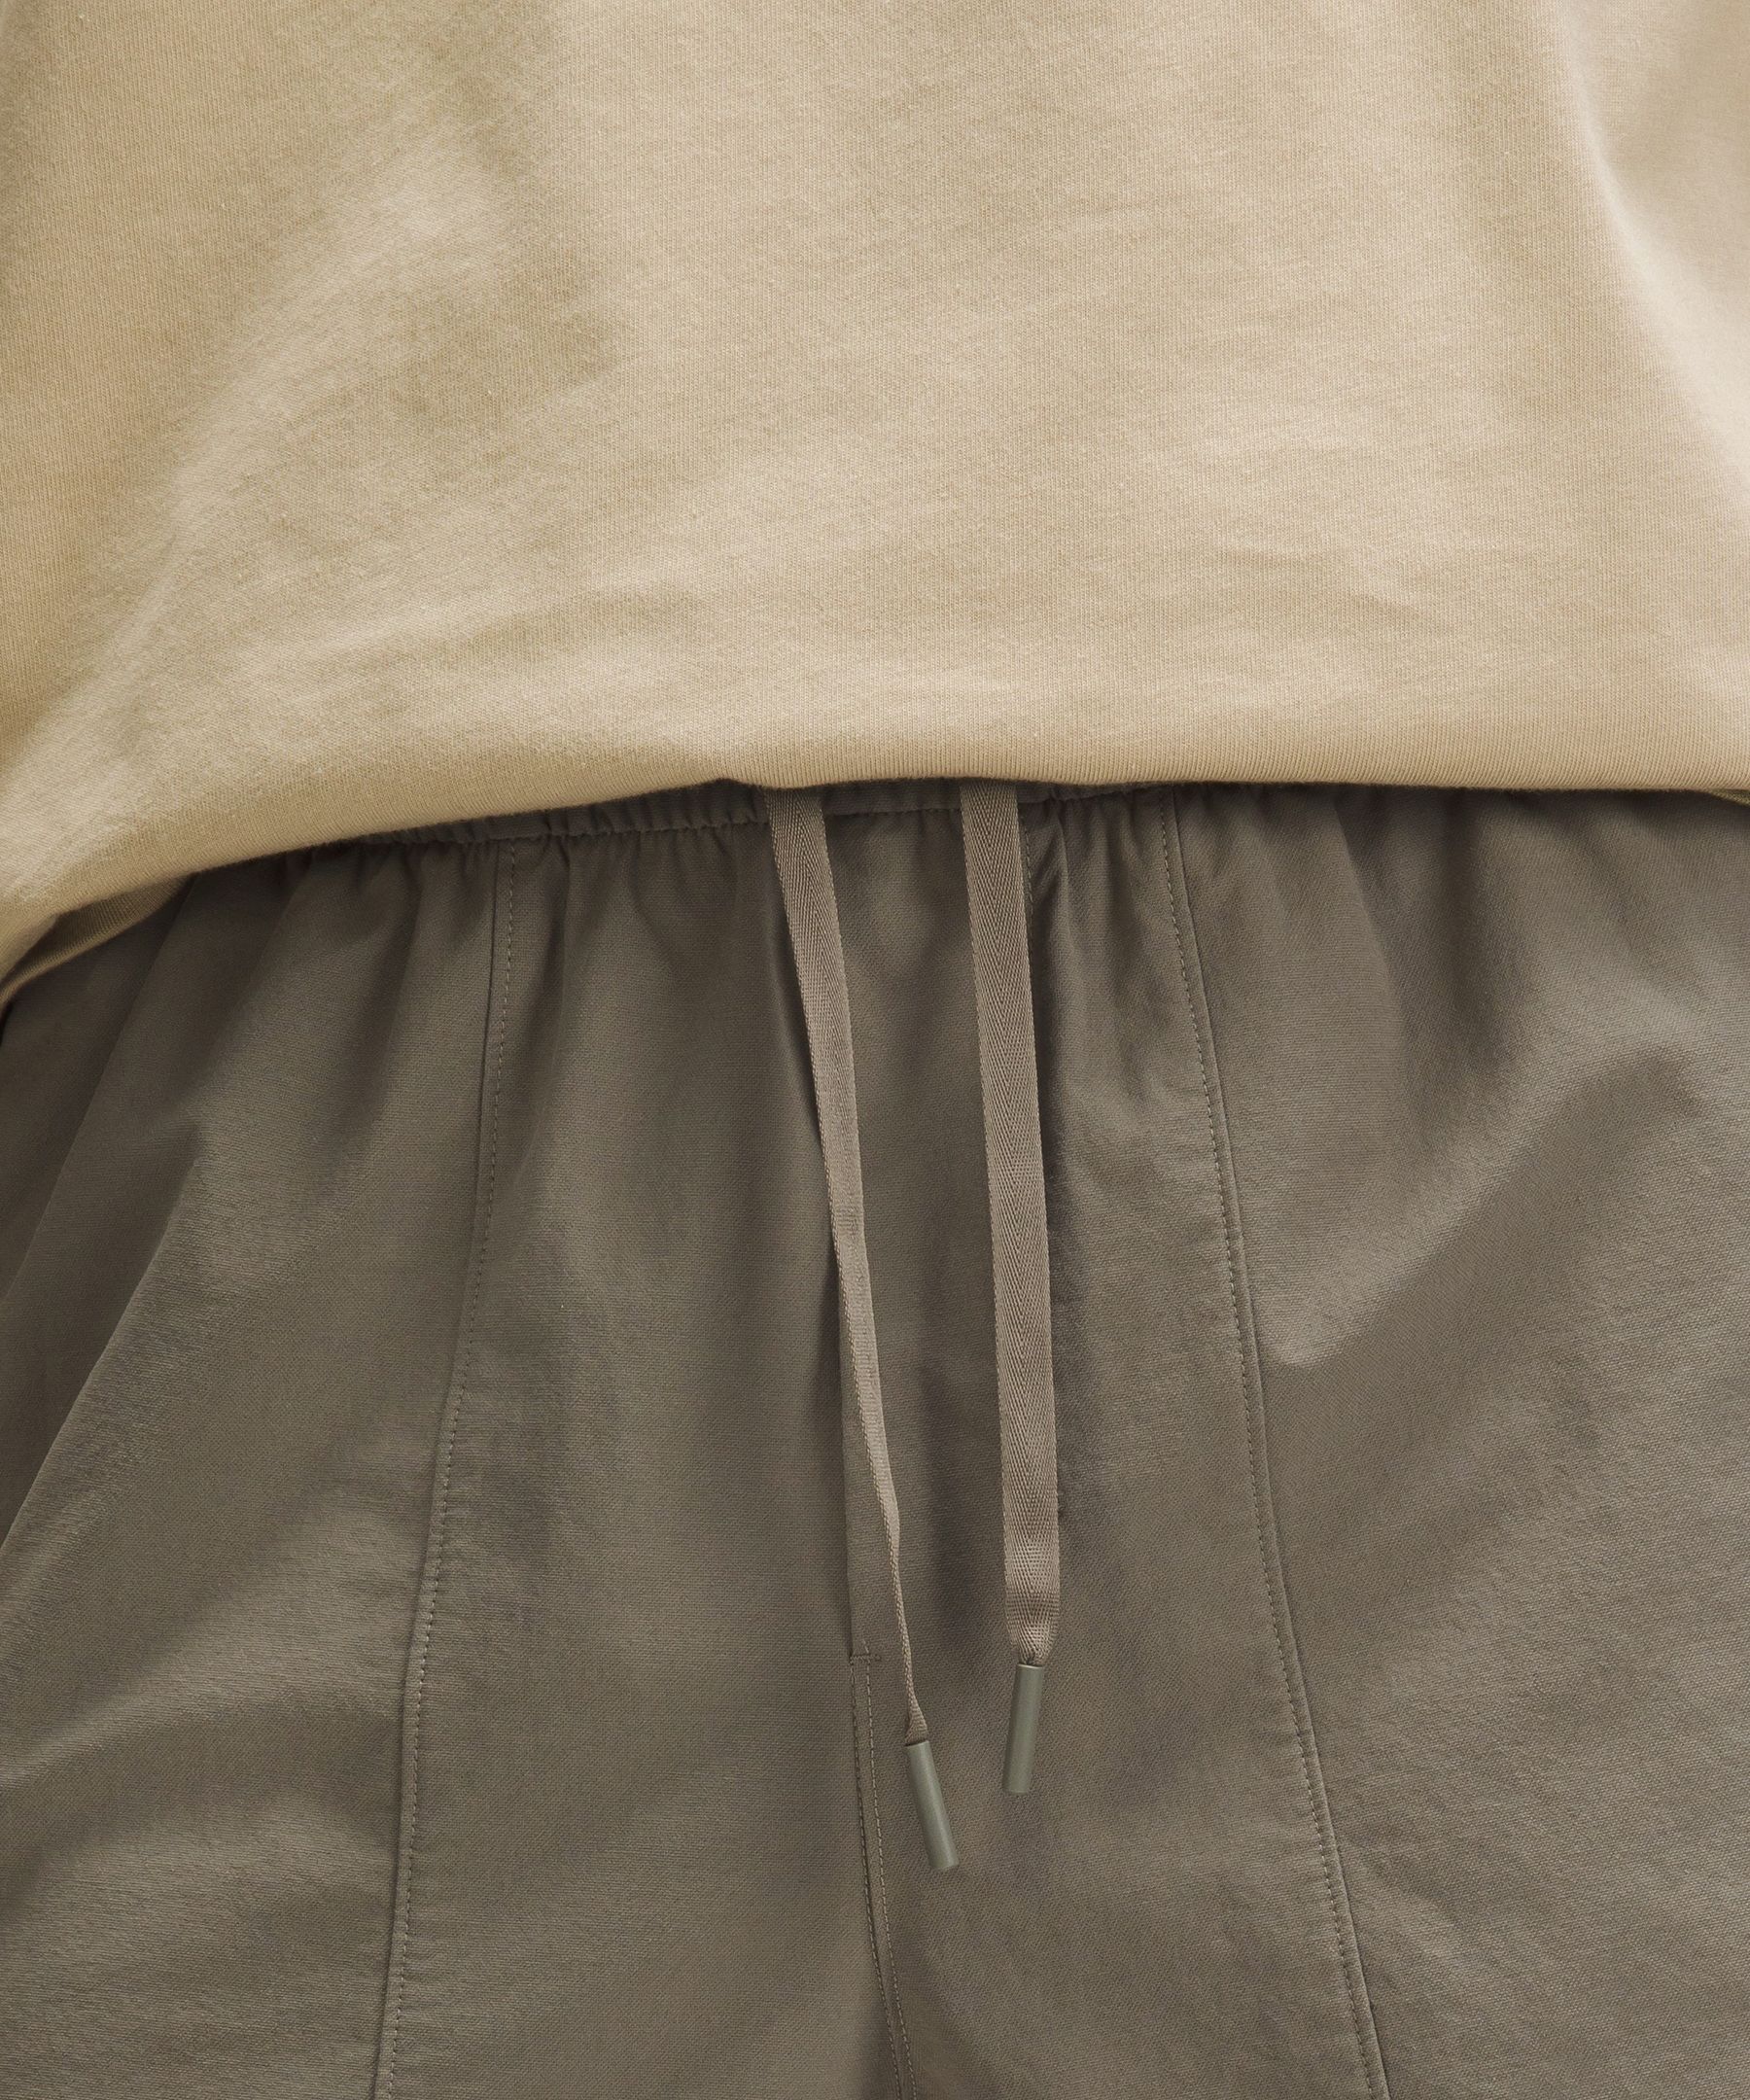 Shop Lululemon Bowline Shorts 5" Stretch Cotton Versatwill